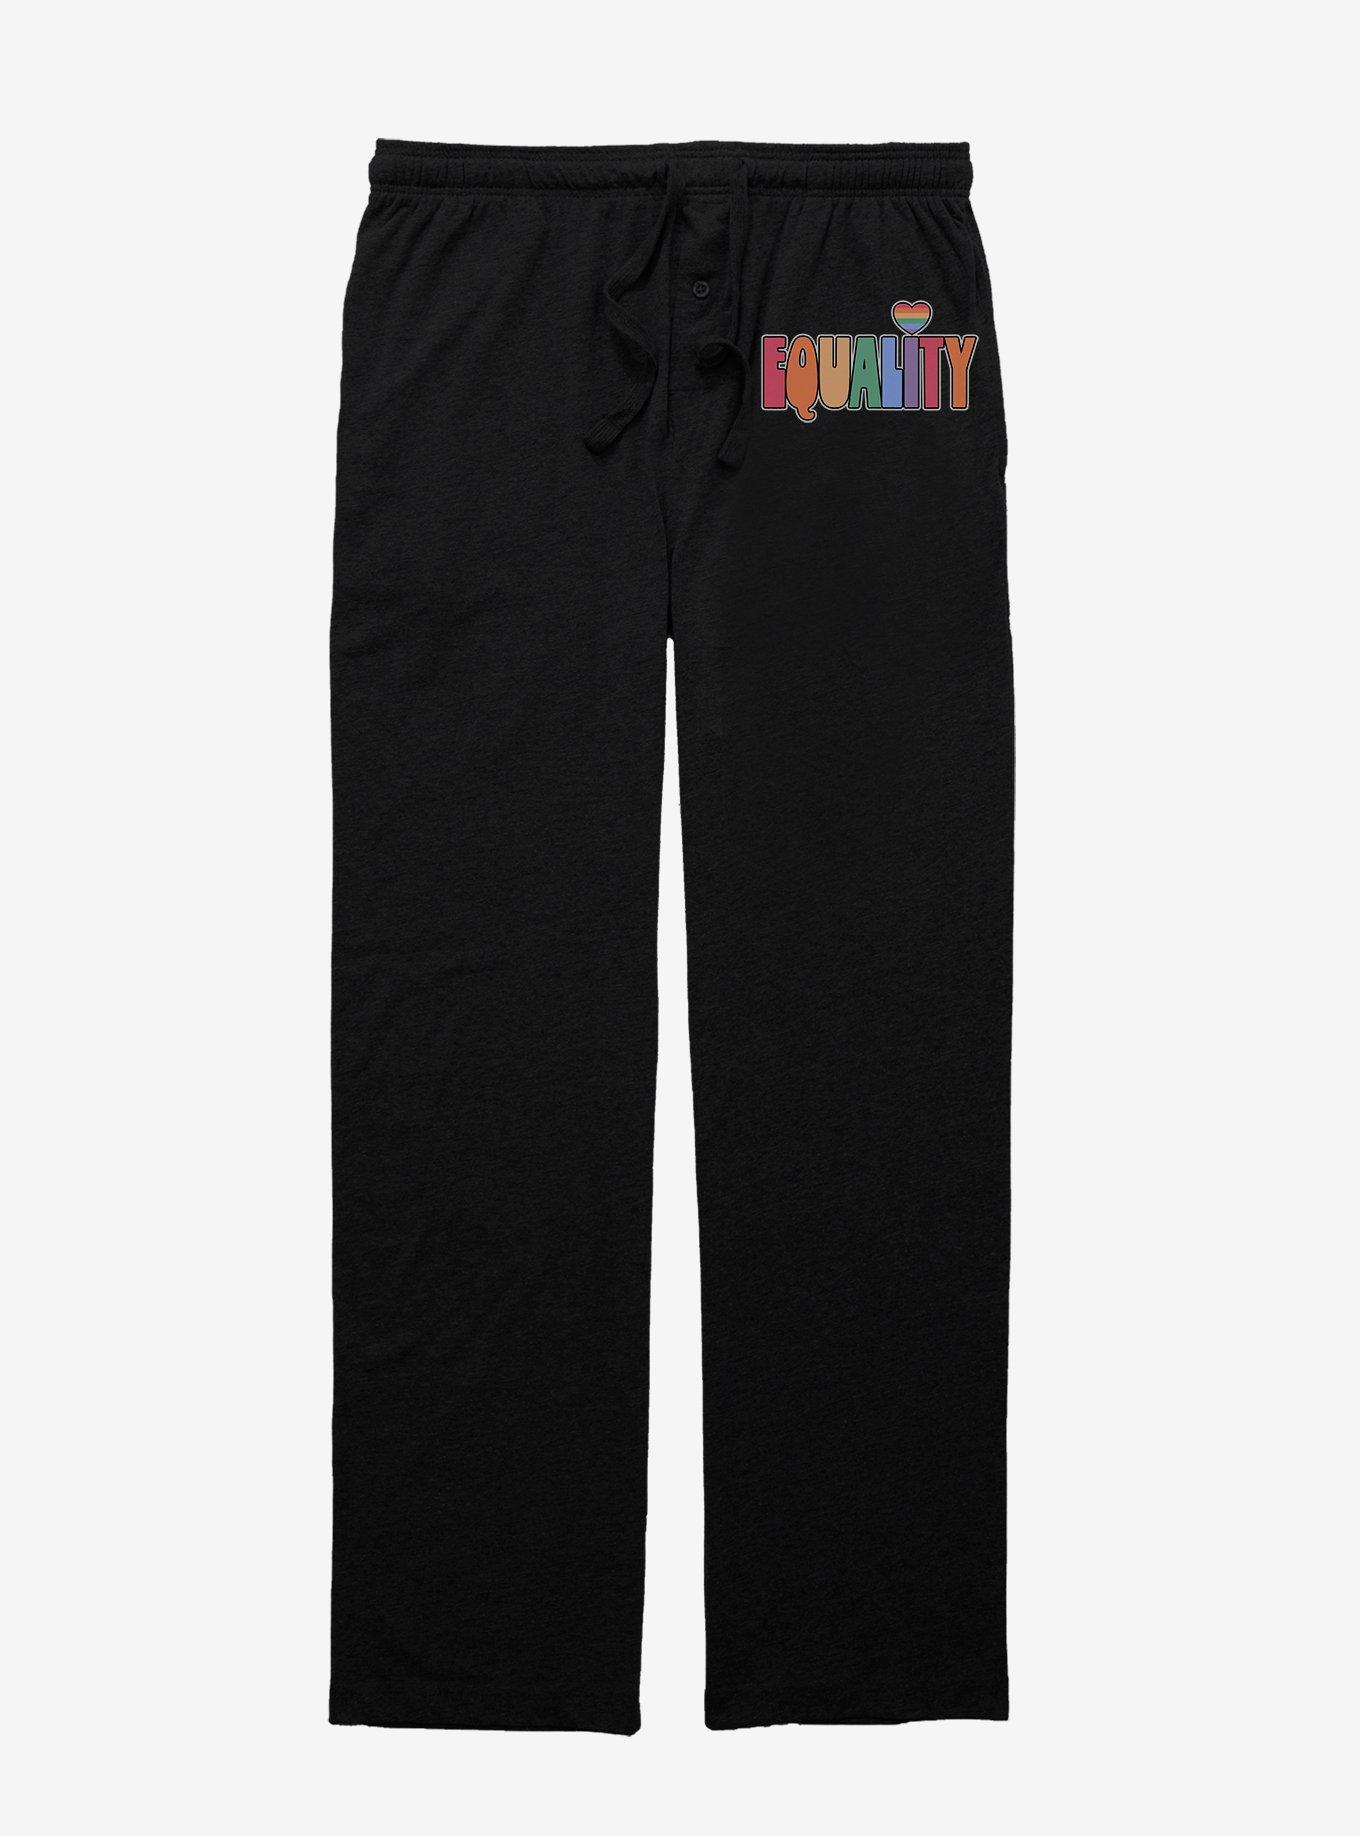 Equality Heart Pajama Pants, BLACK, hi-res